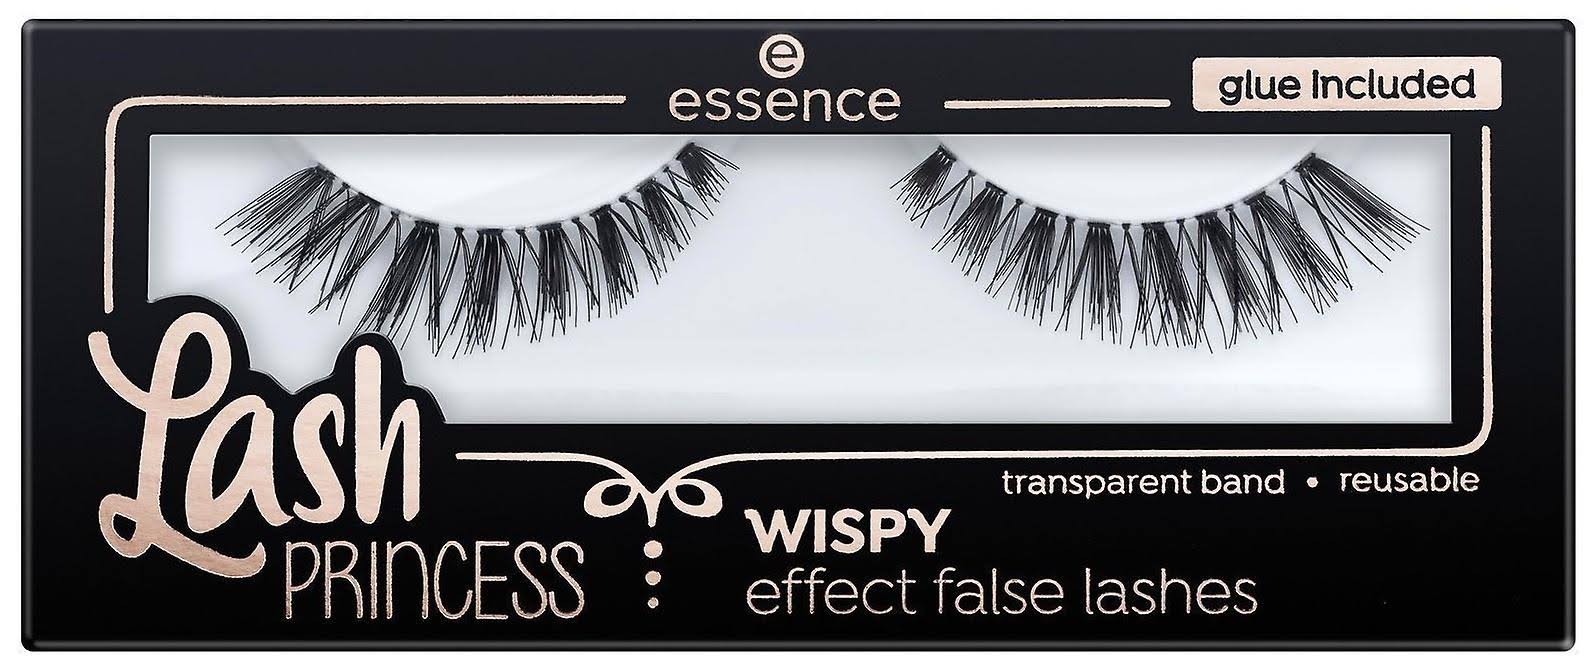 Essence Lash Princess Wispy Effect False Lashes X1